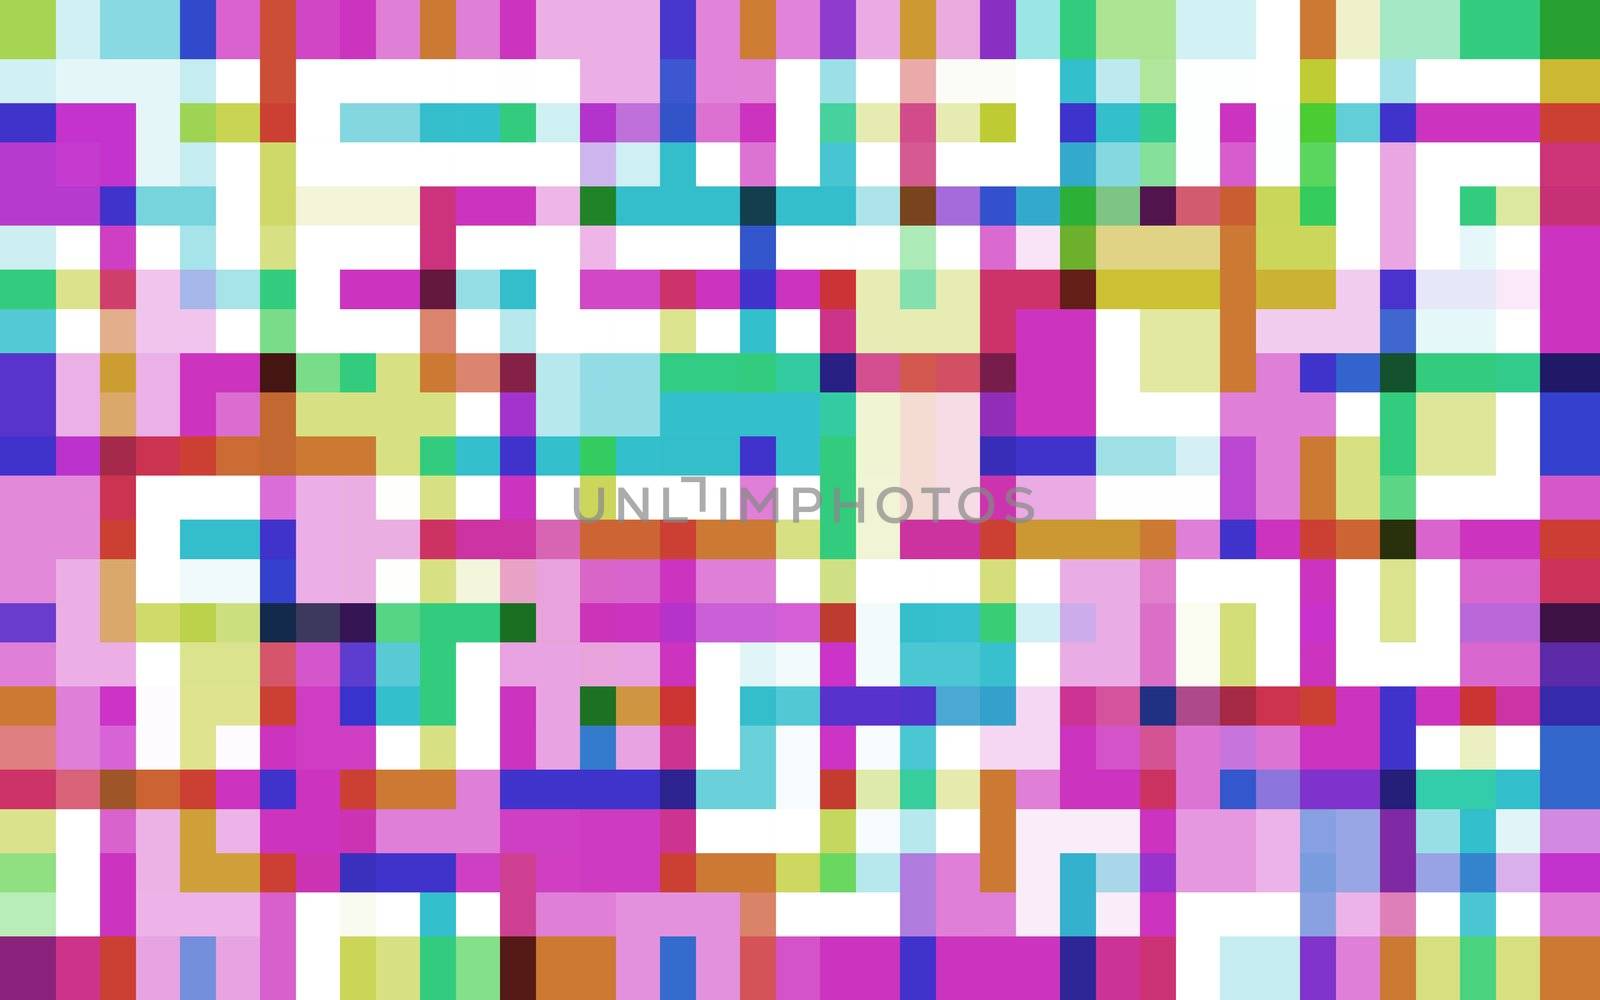 pixelated maze by stockarch